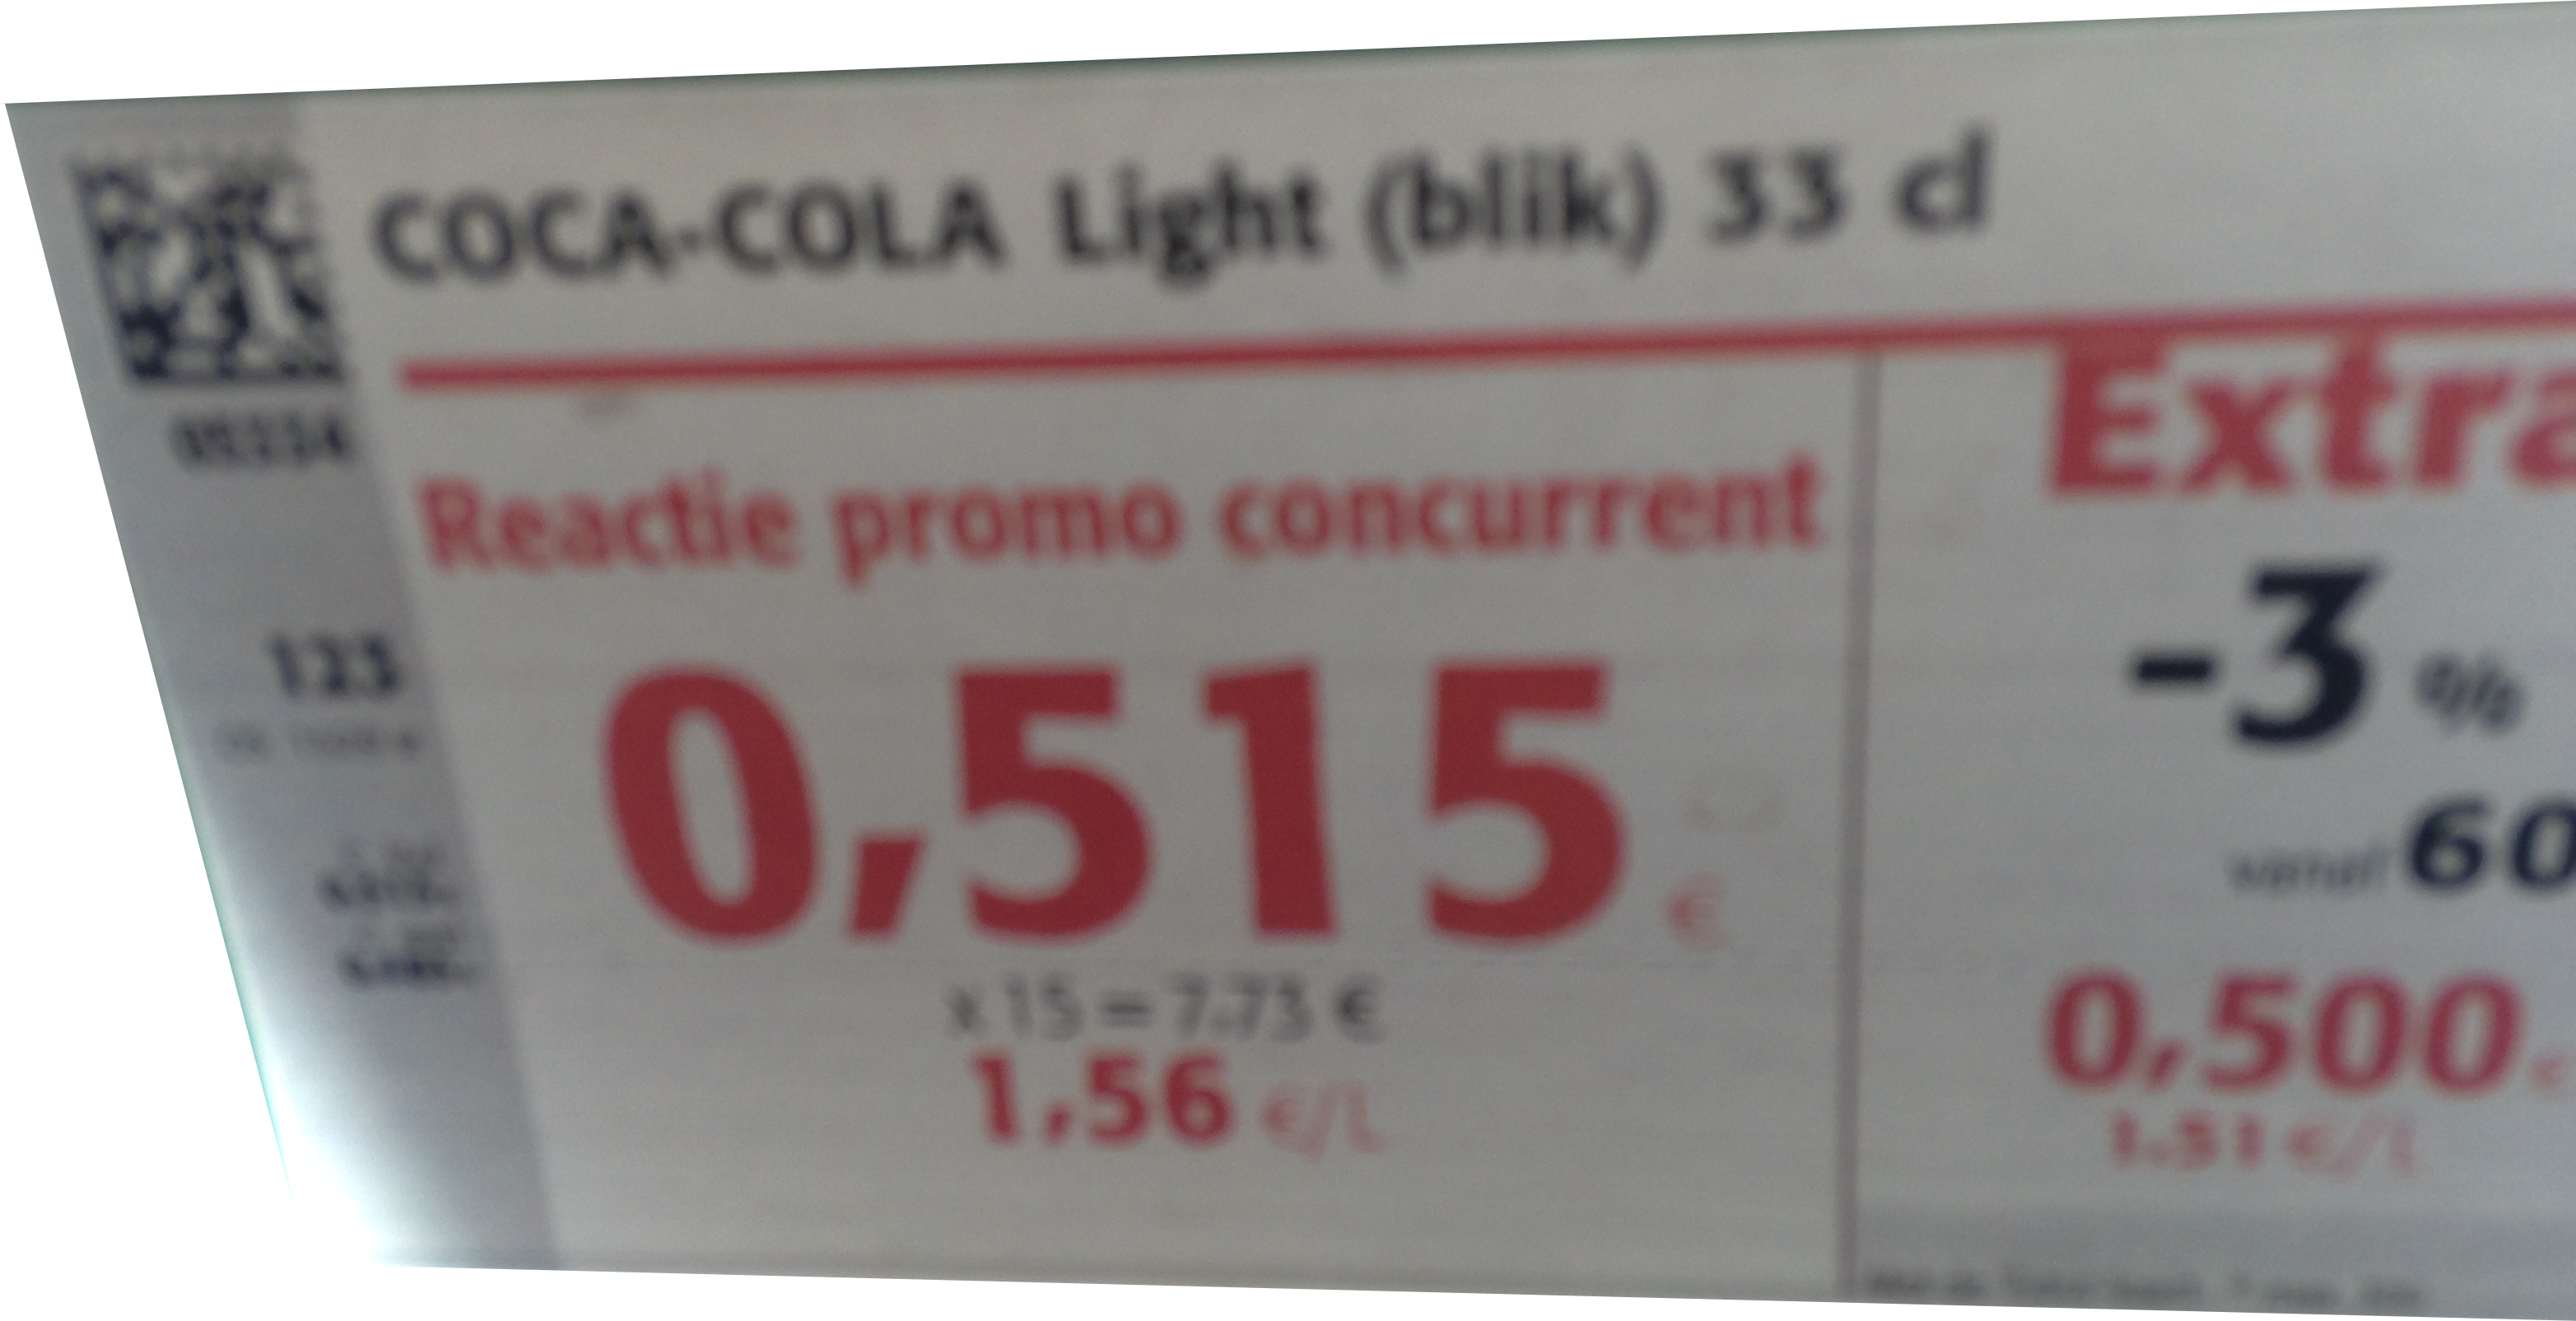 Coca-Cola Light 33cl Colruyt